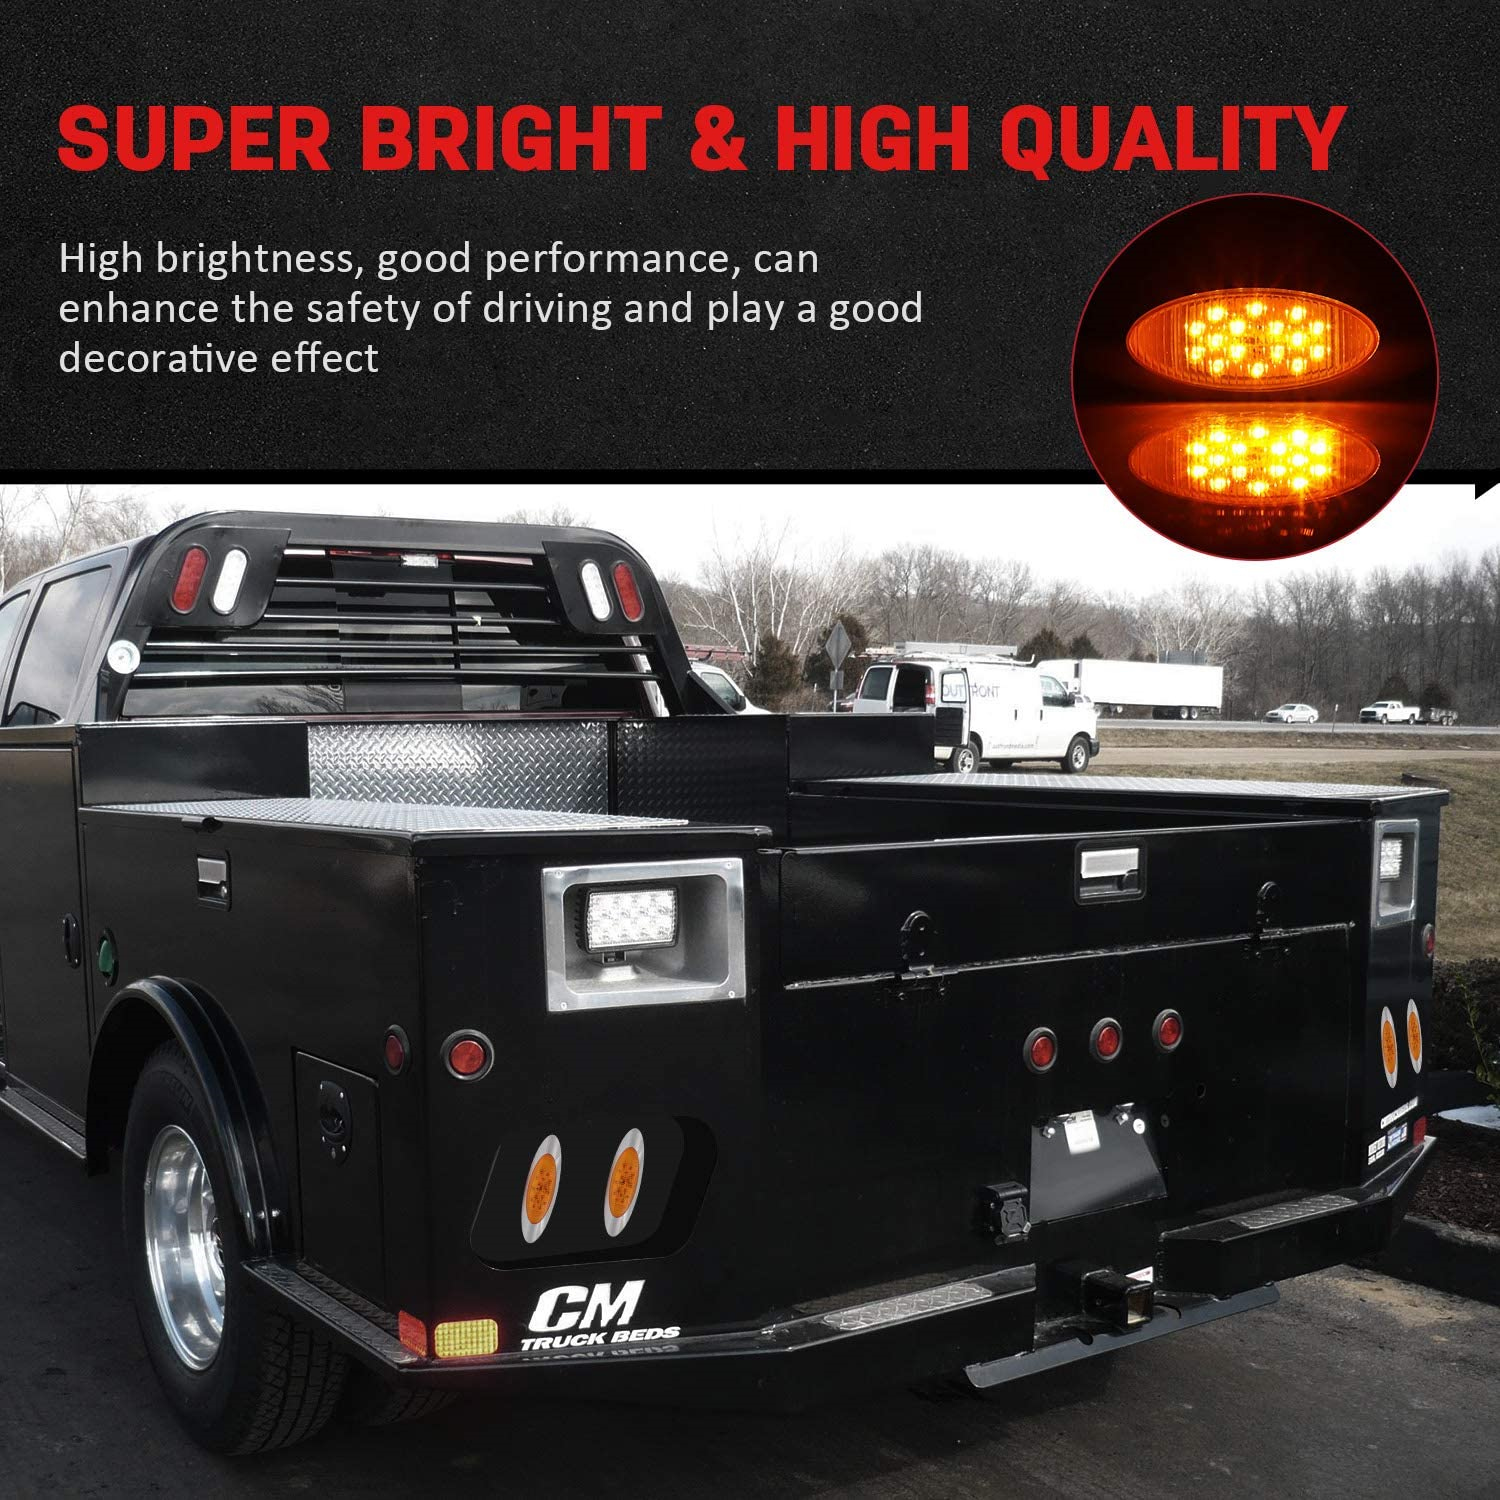 9PCS Universal Amber Side Marker Light Tail Lamps 16LED Oval Chrome for Truck Trailer Pickup